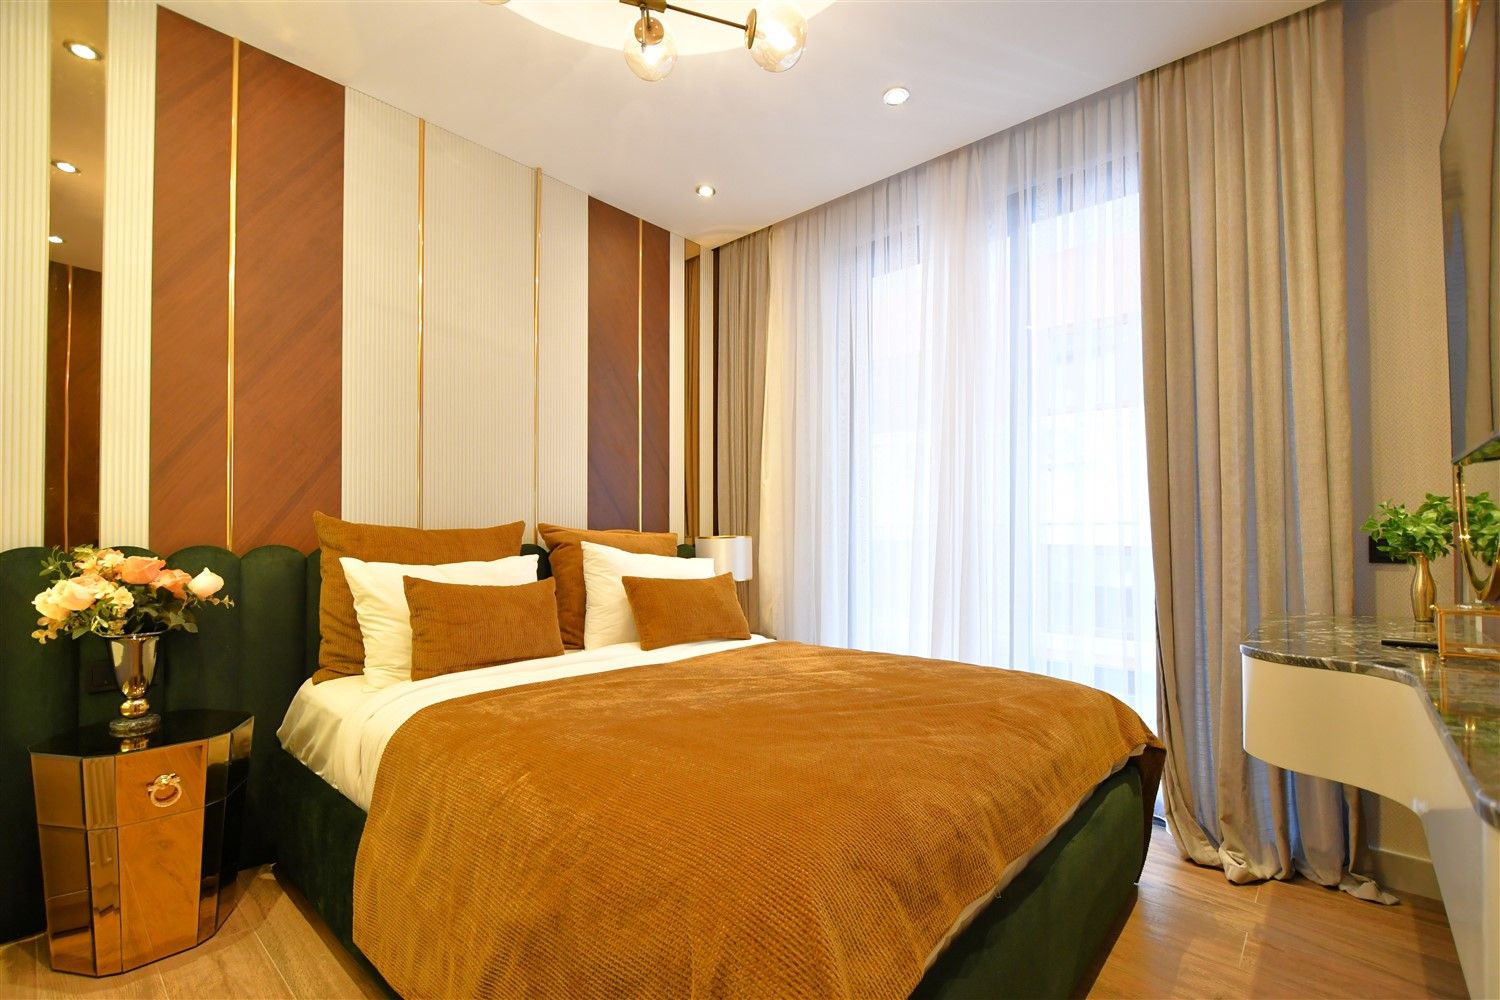 2 bedrooms furnished apartment, first coastline